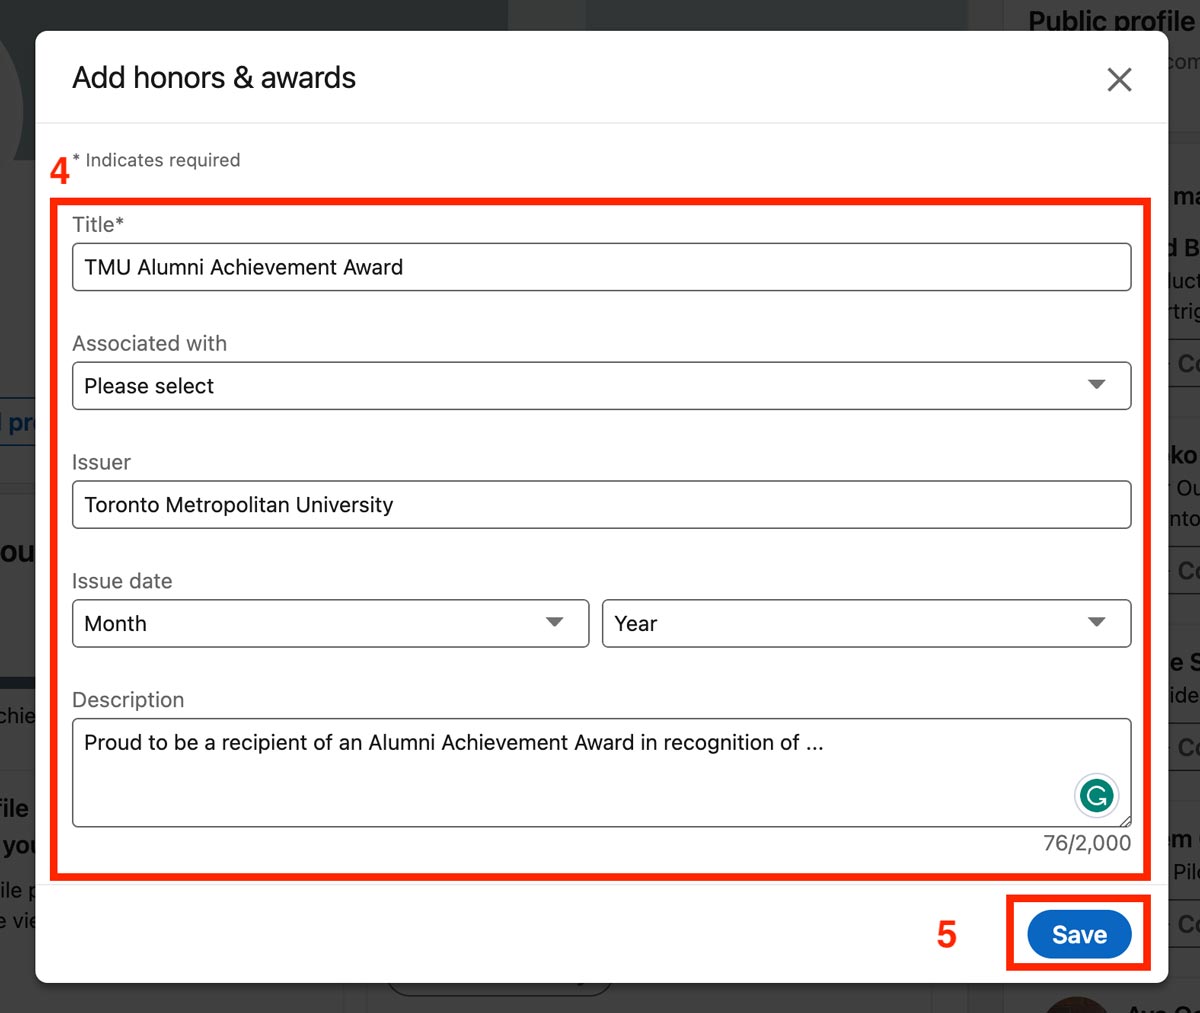 Linkedin screenshot "Add honors & awards" interface